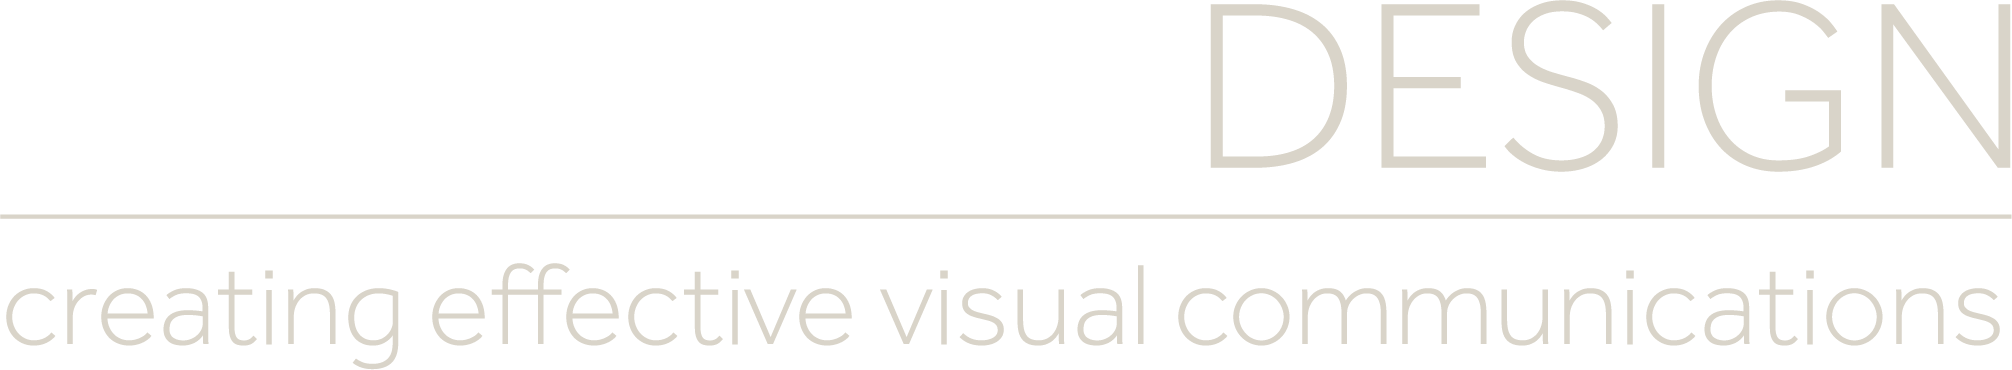 DeCIACCO DESIGN - creating professional visual communications